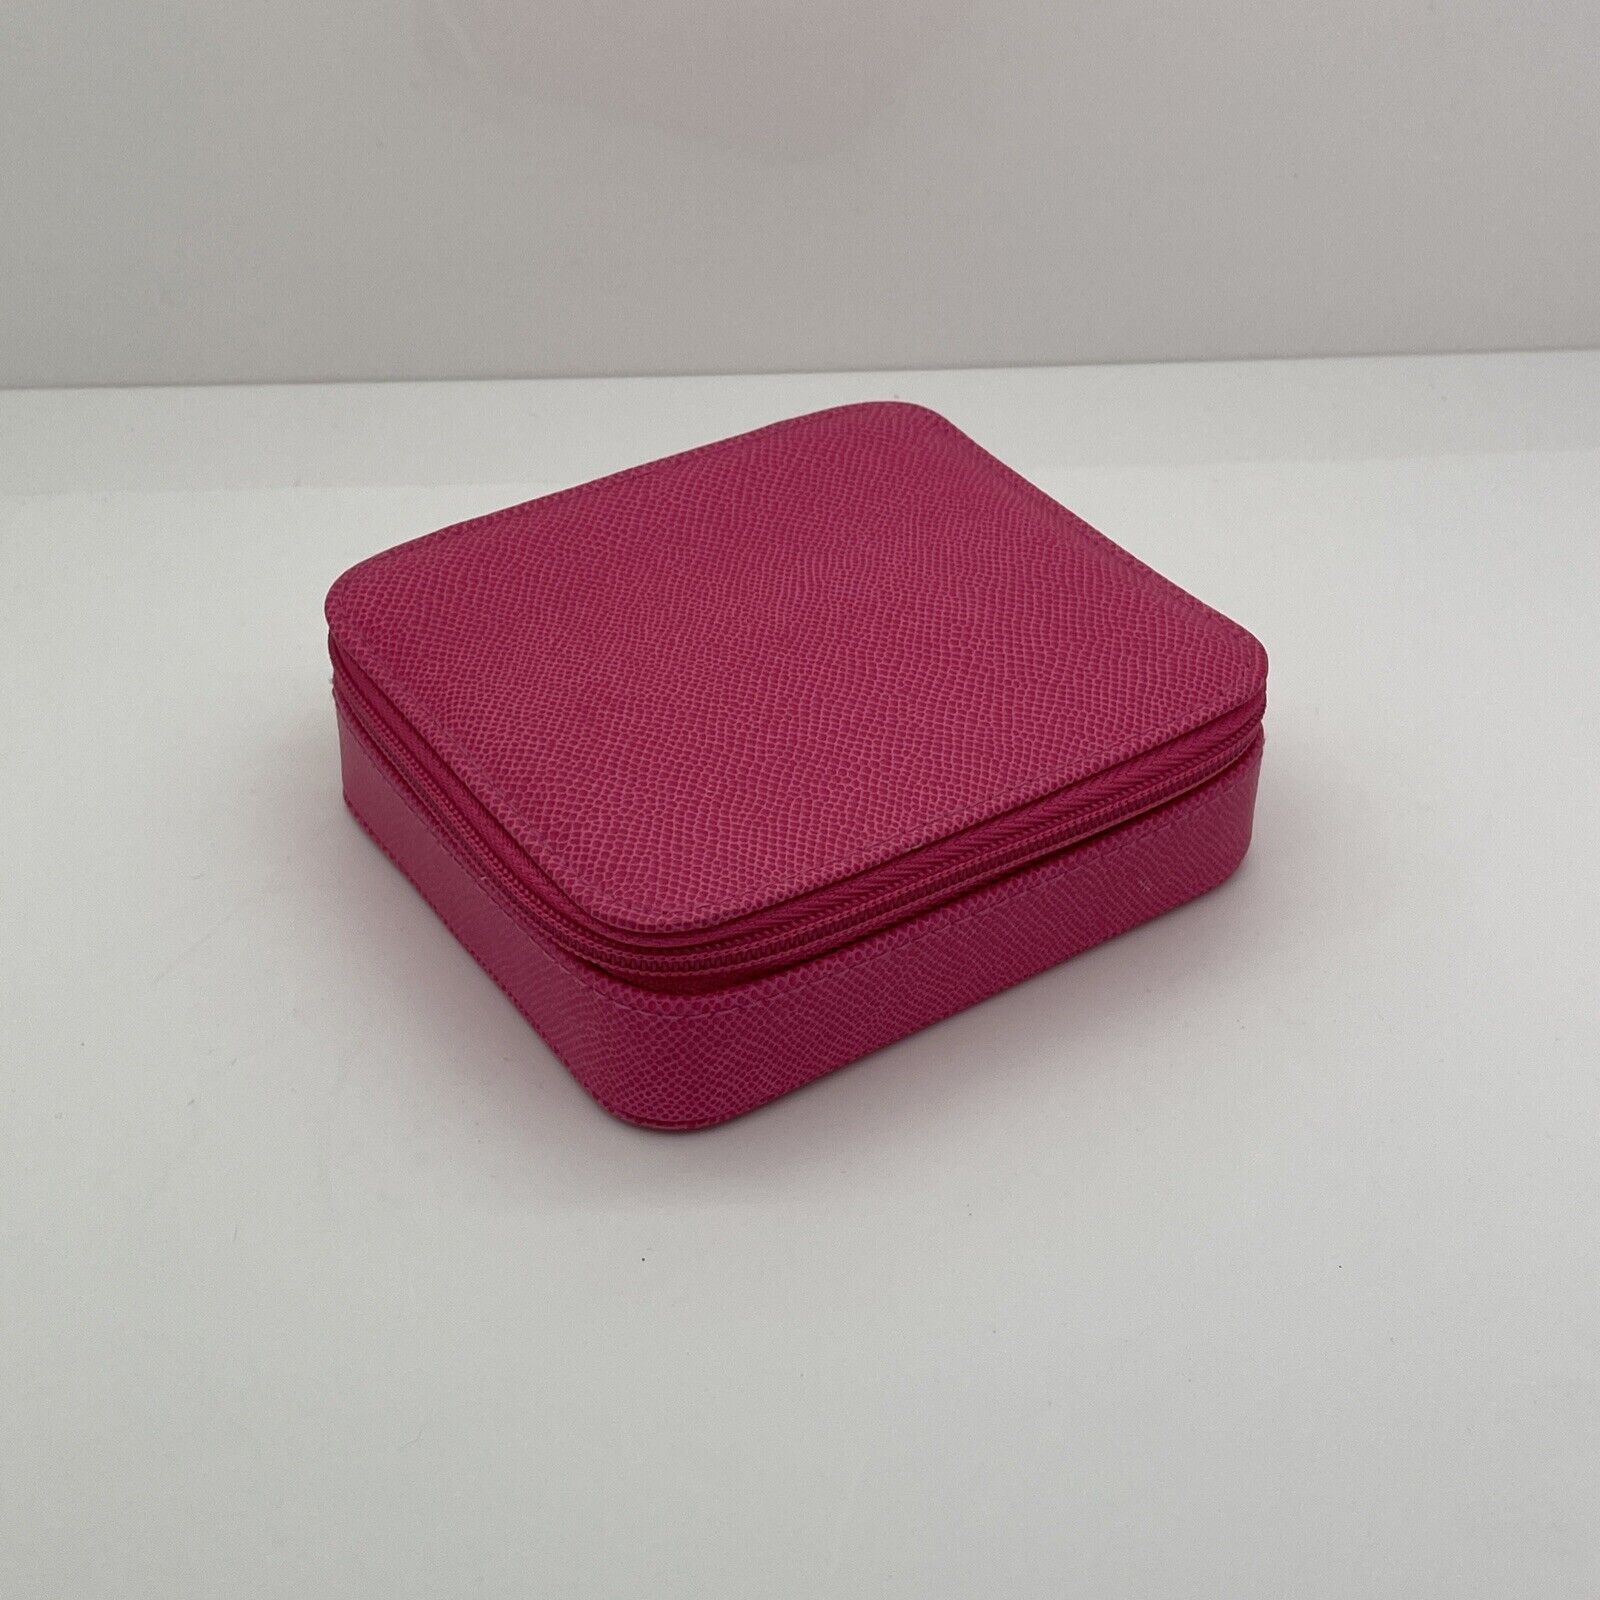 Estée Lauder Small Bag Carry Case Makeup Holder Hot Pink 4.5” x 4” x 1.5” - $6.92